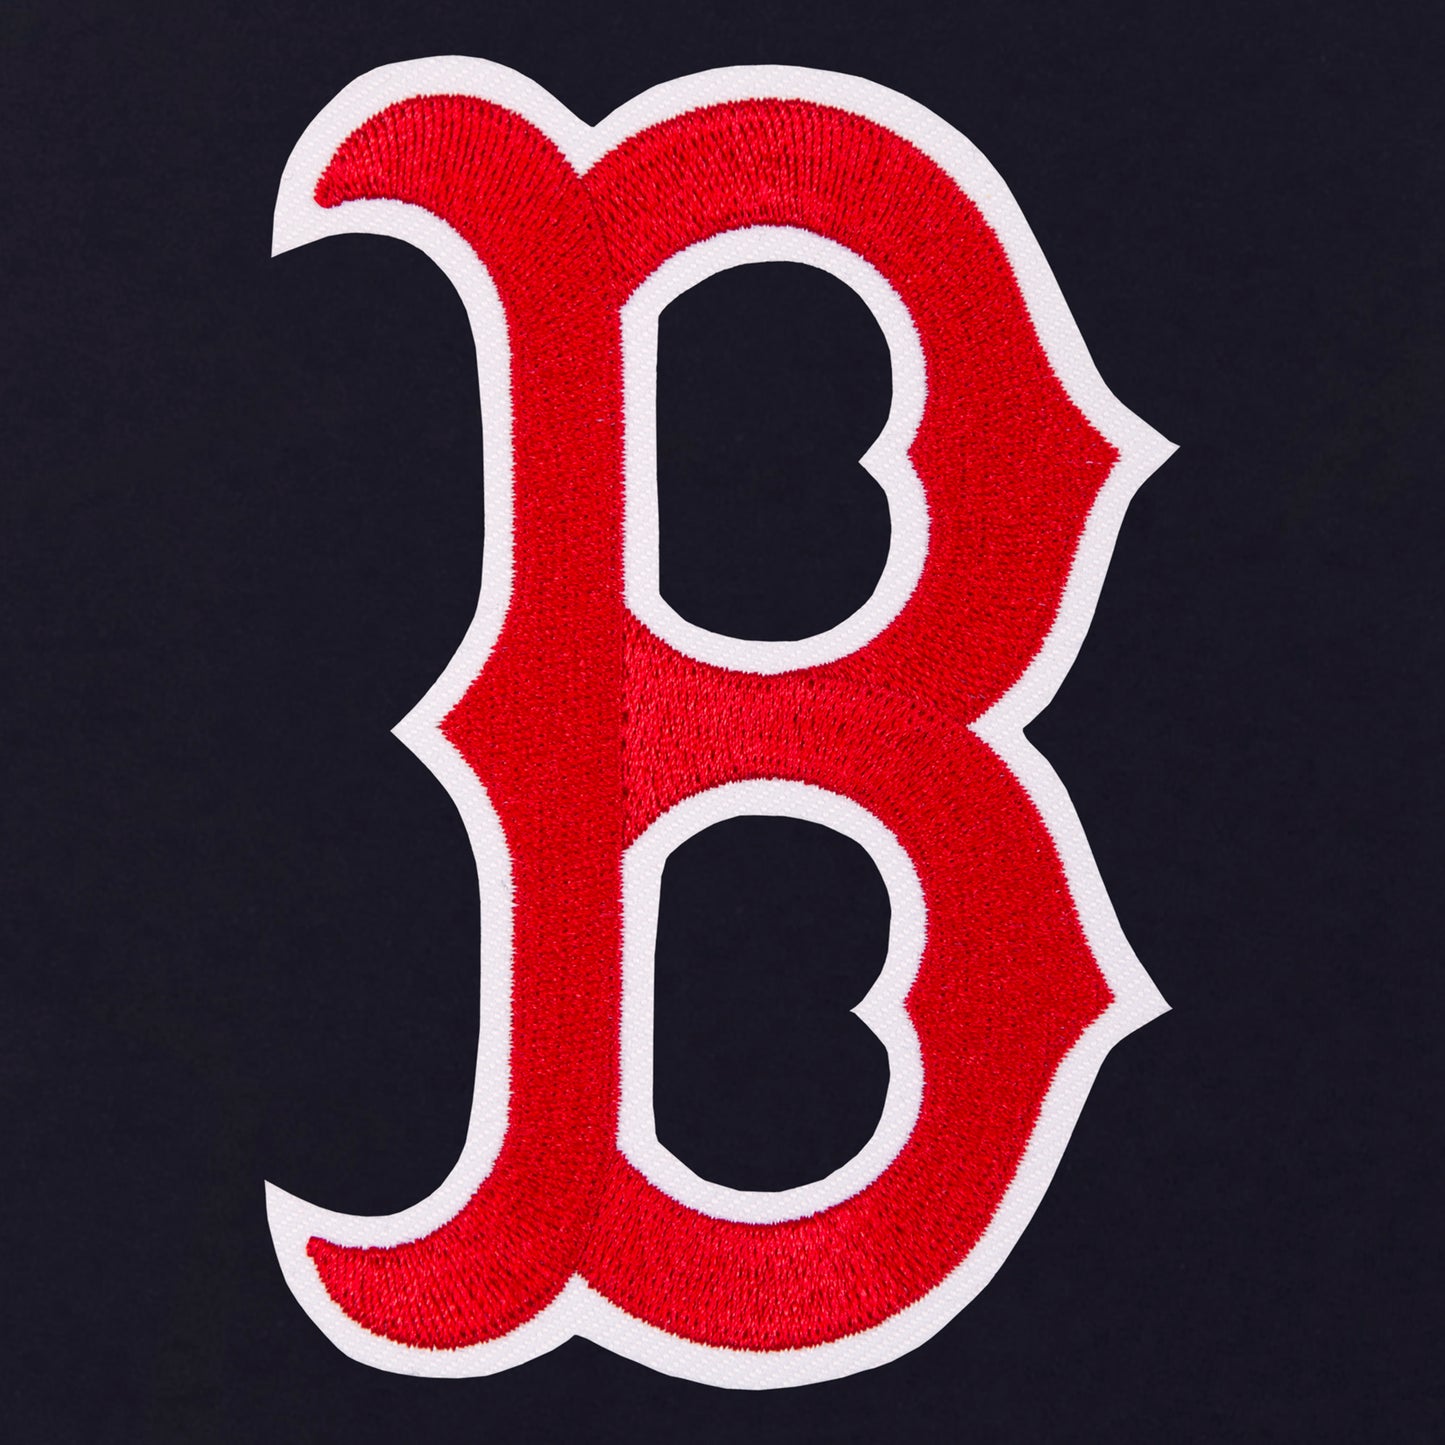 Boston Red Sox Ladies Reversible Fleece Jacket